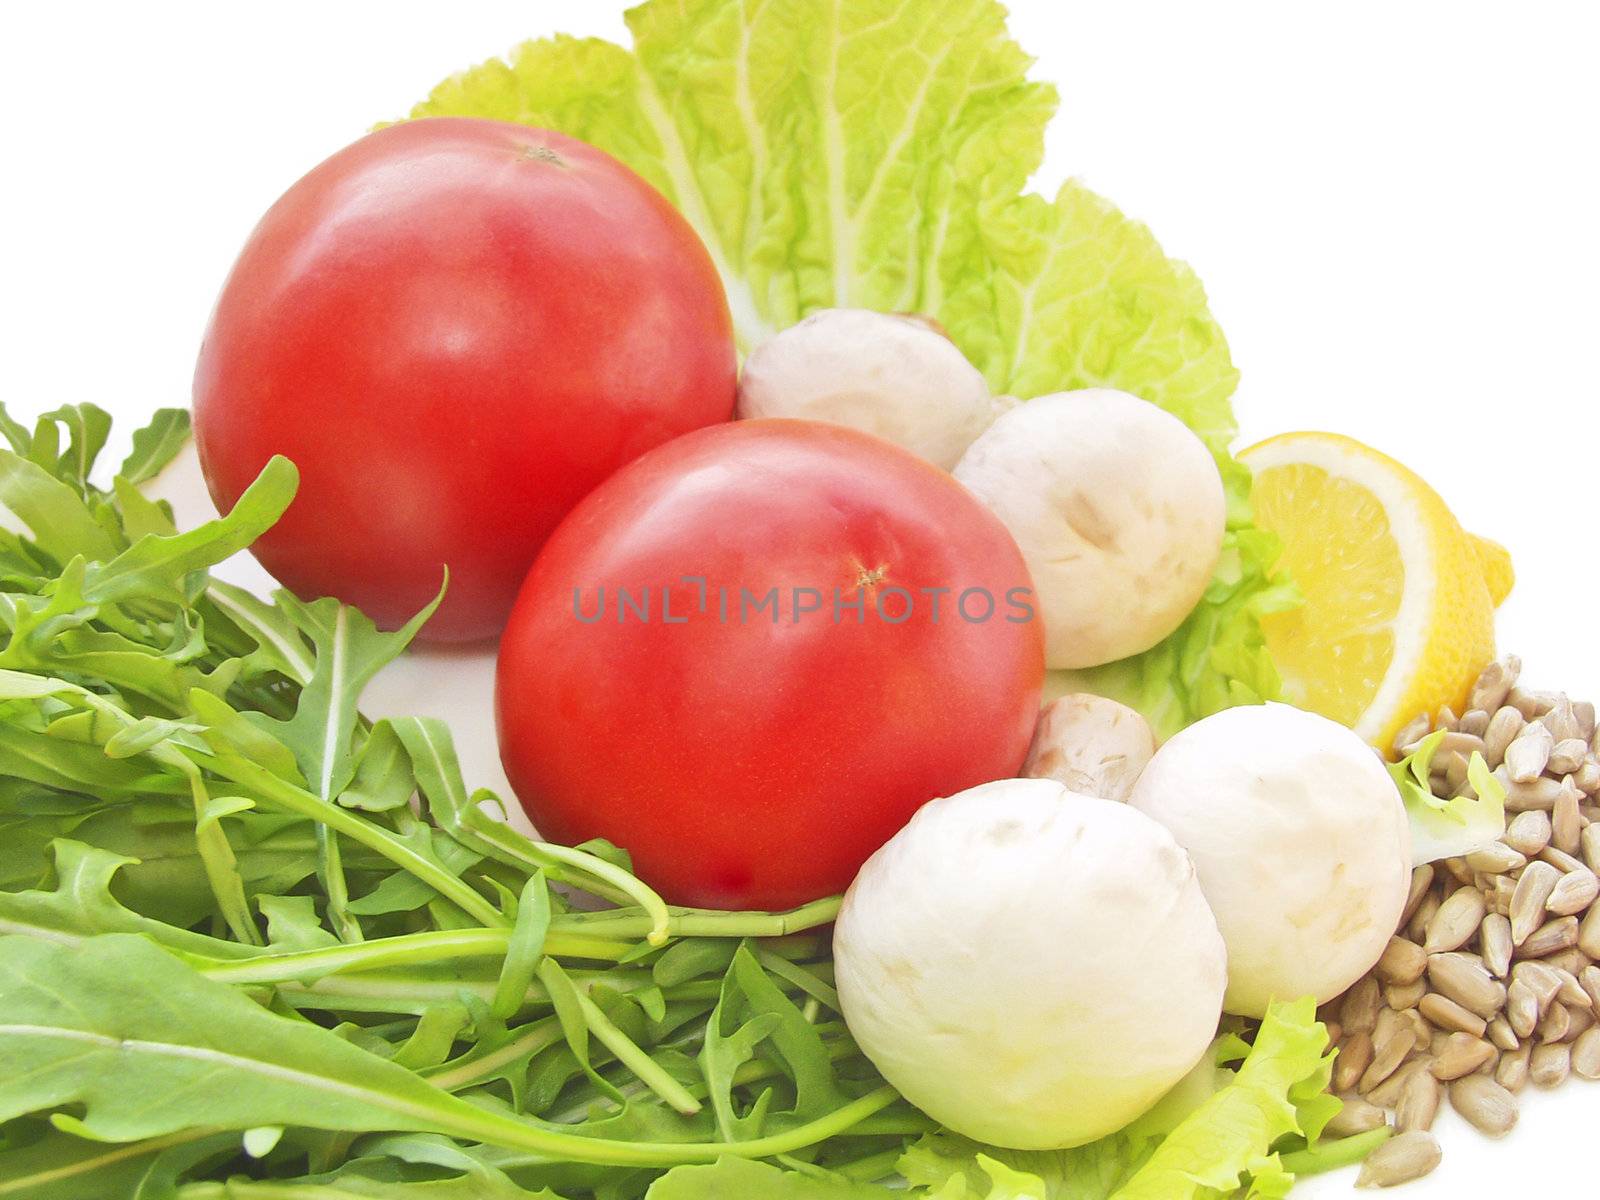 Fresh vegetables isolated on white 